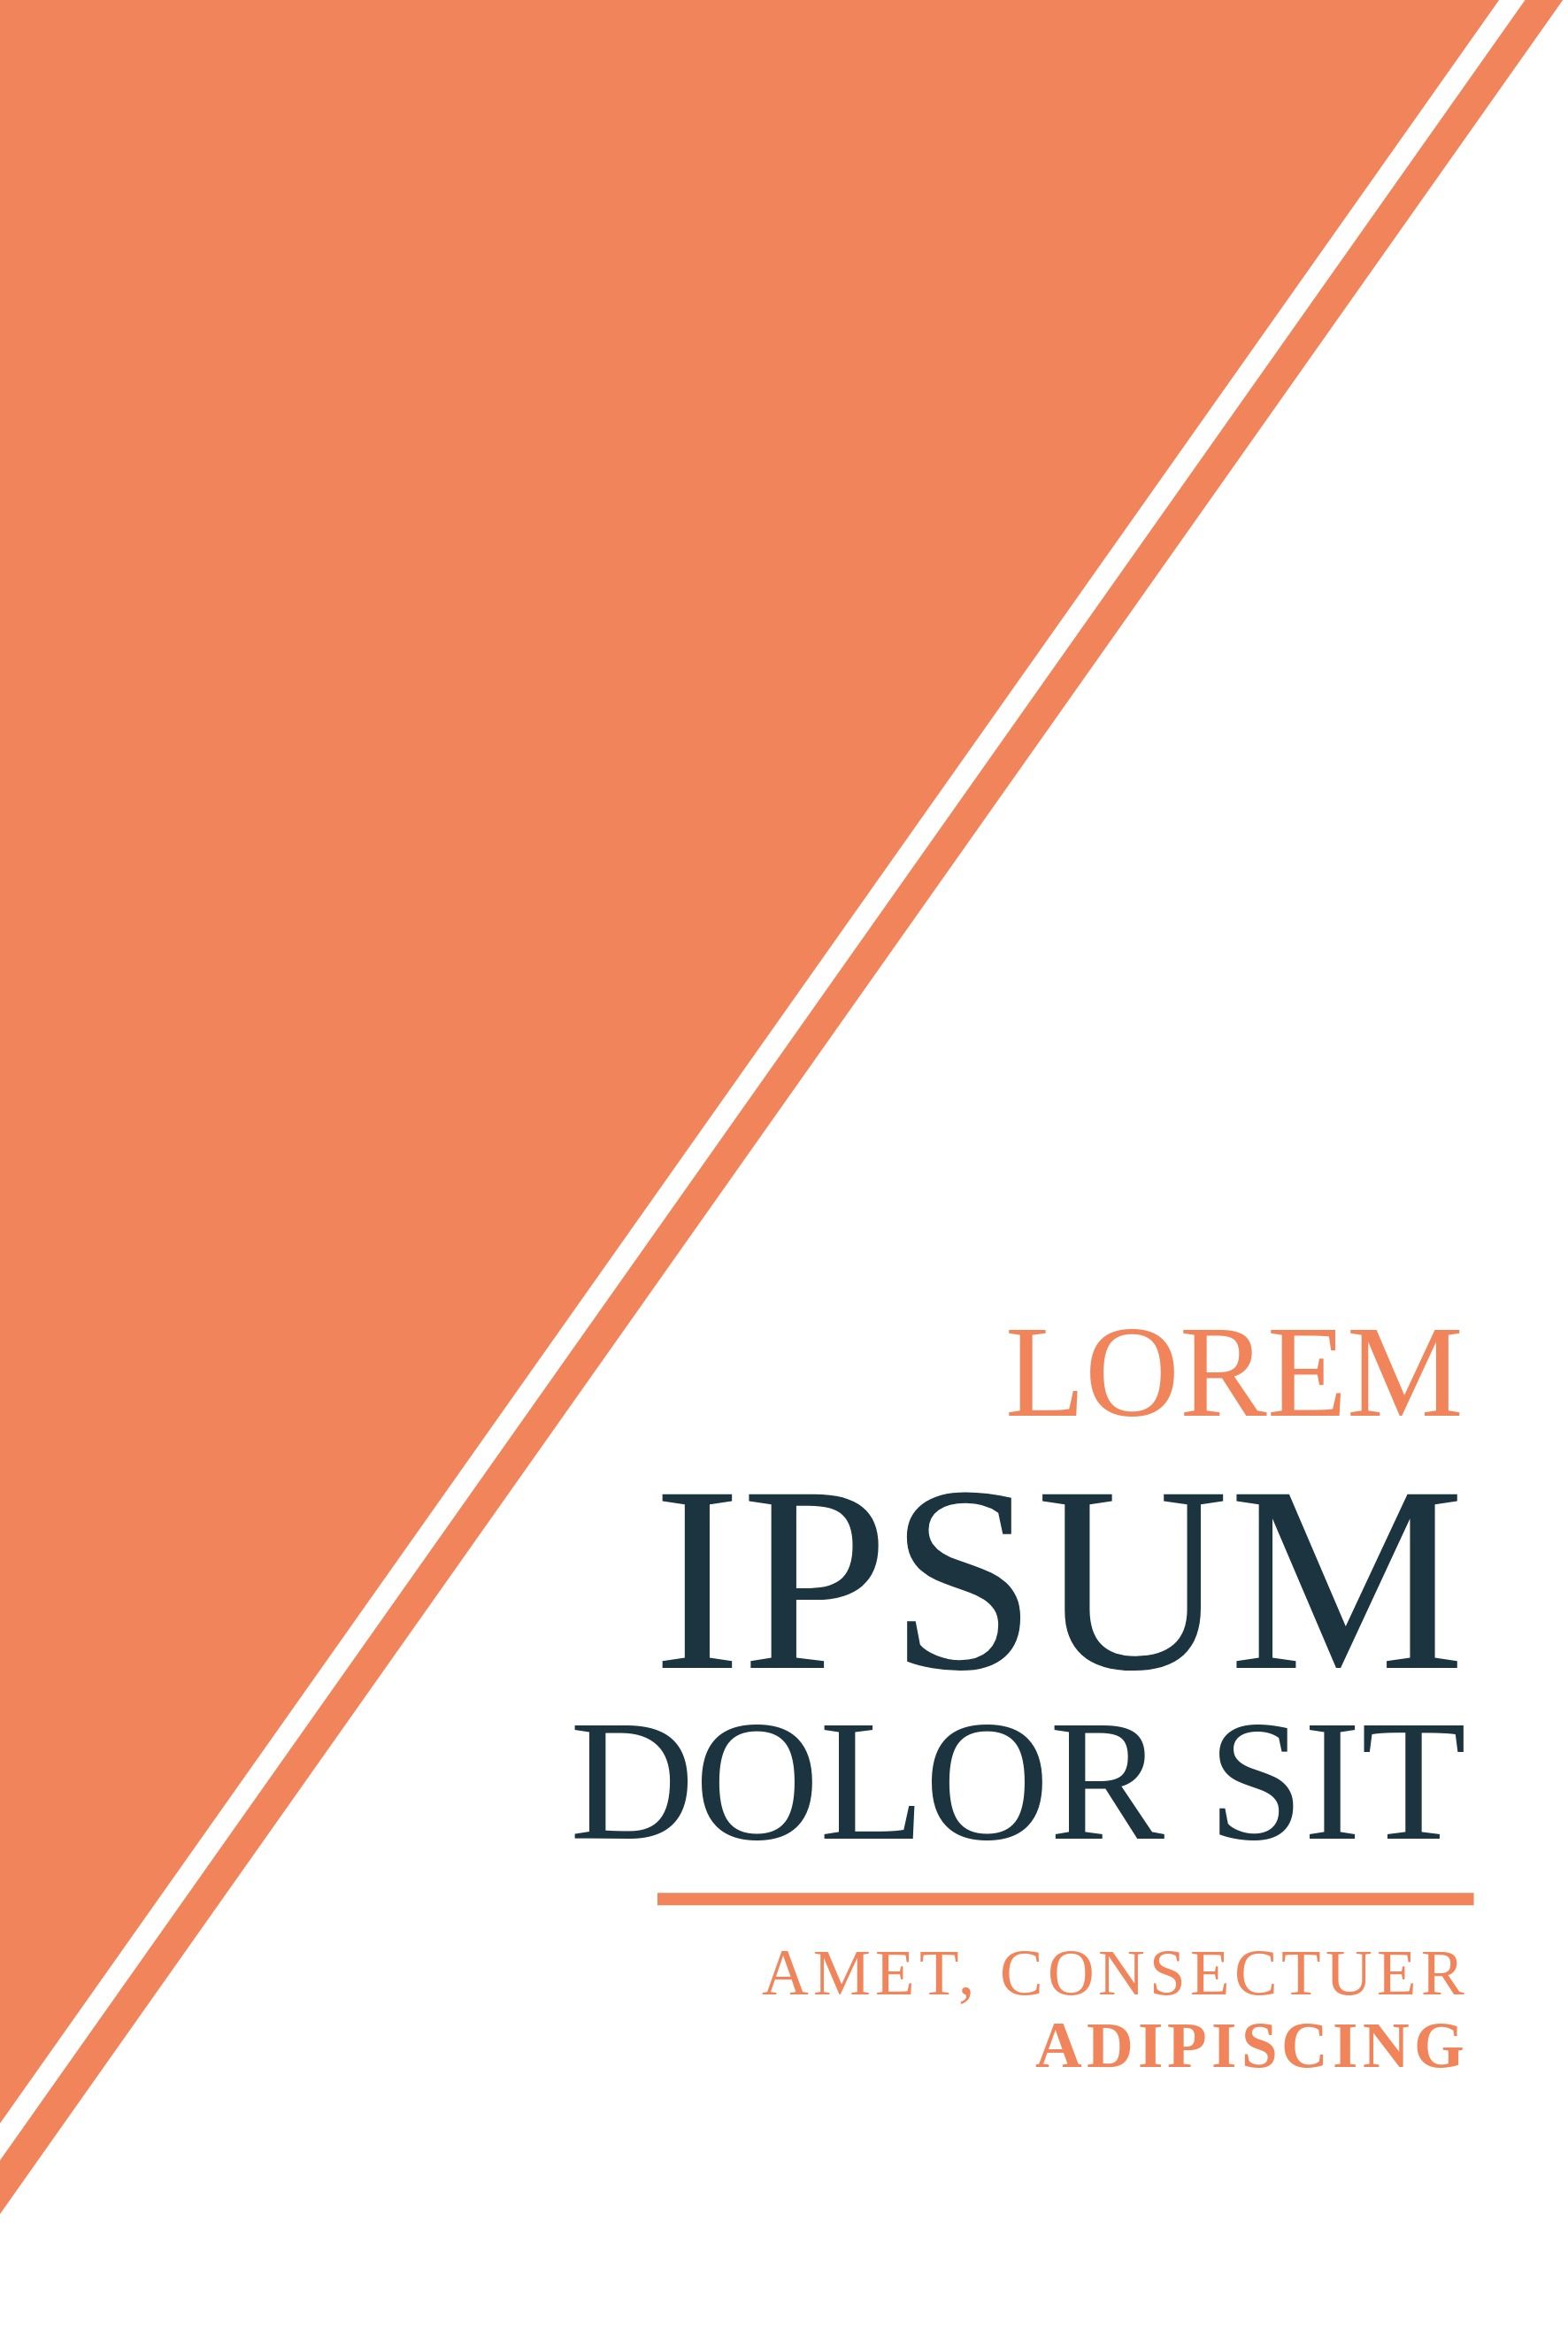 Plantilla de portada de libro con texto de lorem ipsum para editar